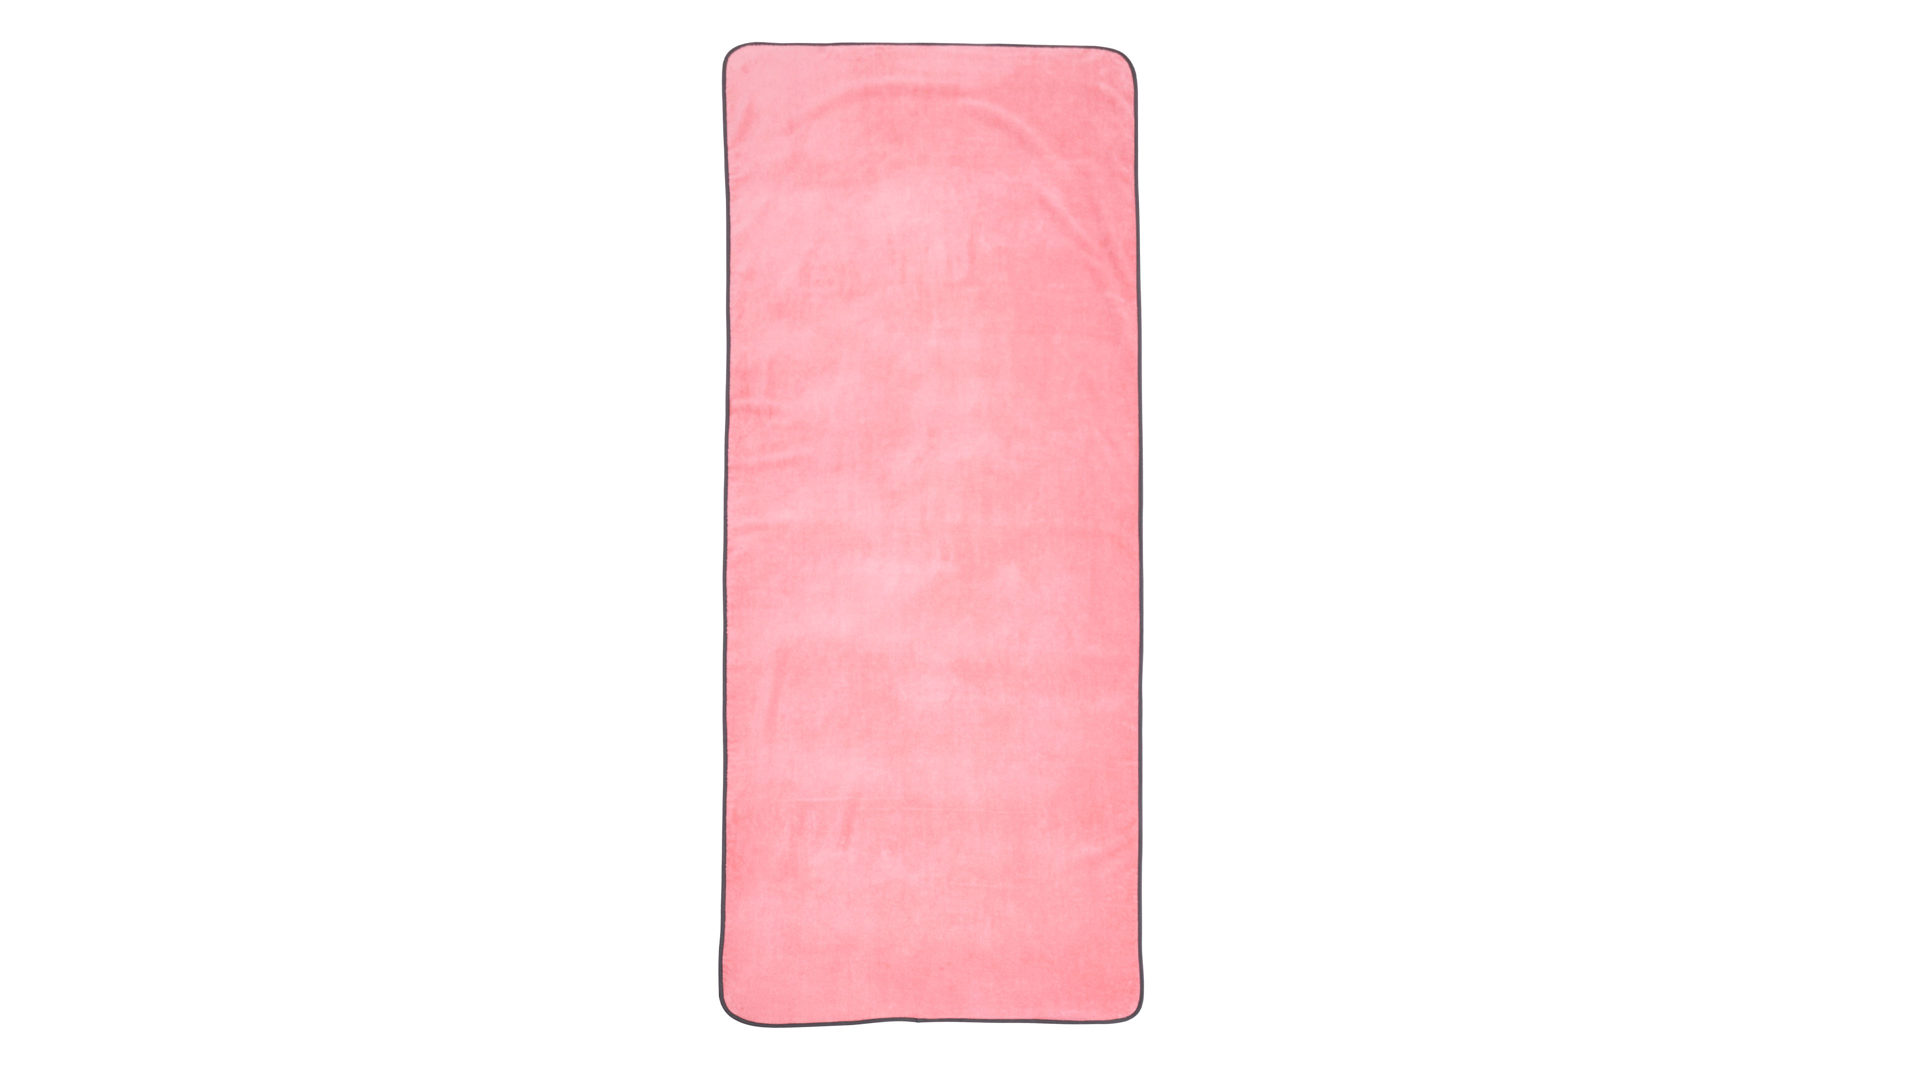 Saunahandtuch Done® be different aus Stoff in Pink DONE® Saunatuch blossomfarbene Baumwolle – ca. 80 x 200 cm